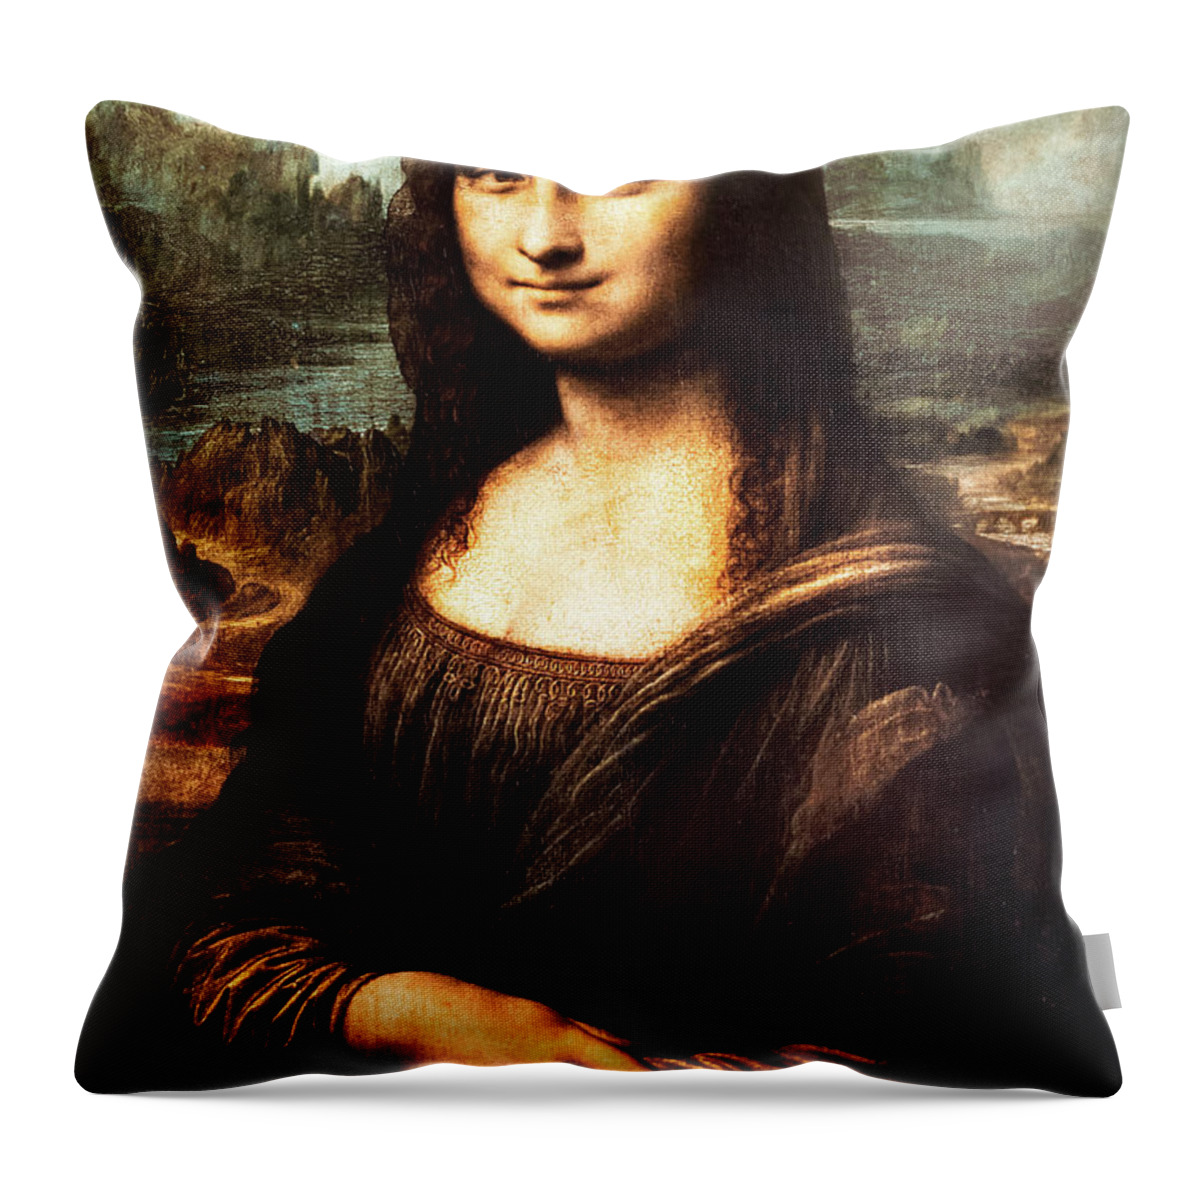 Leonardo Throw Pillow featuring the painting Mona Lisa by Leonardo da Vinci by Leonardo da Vinci